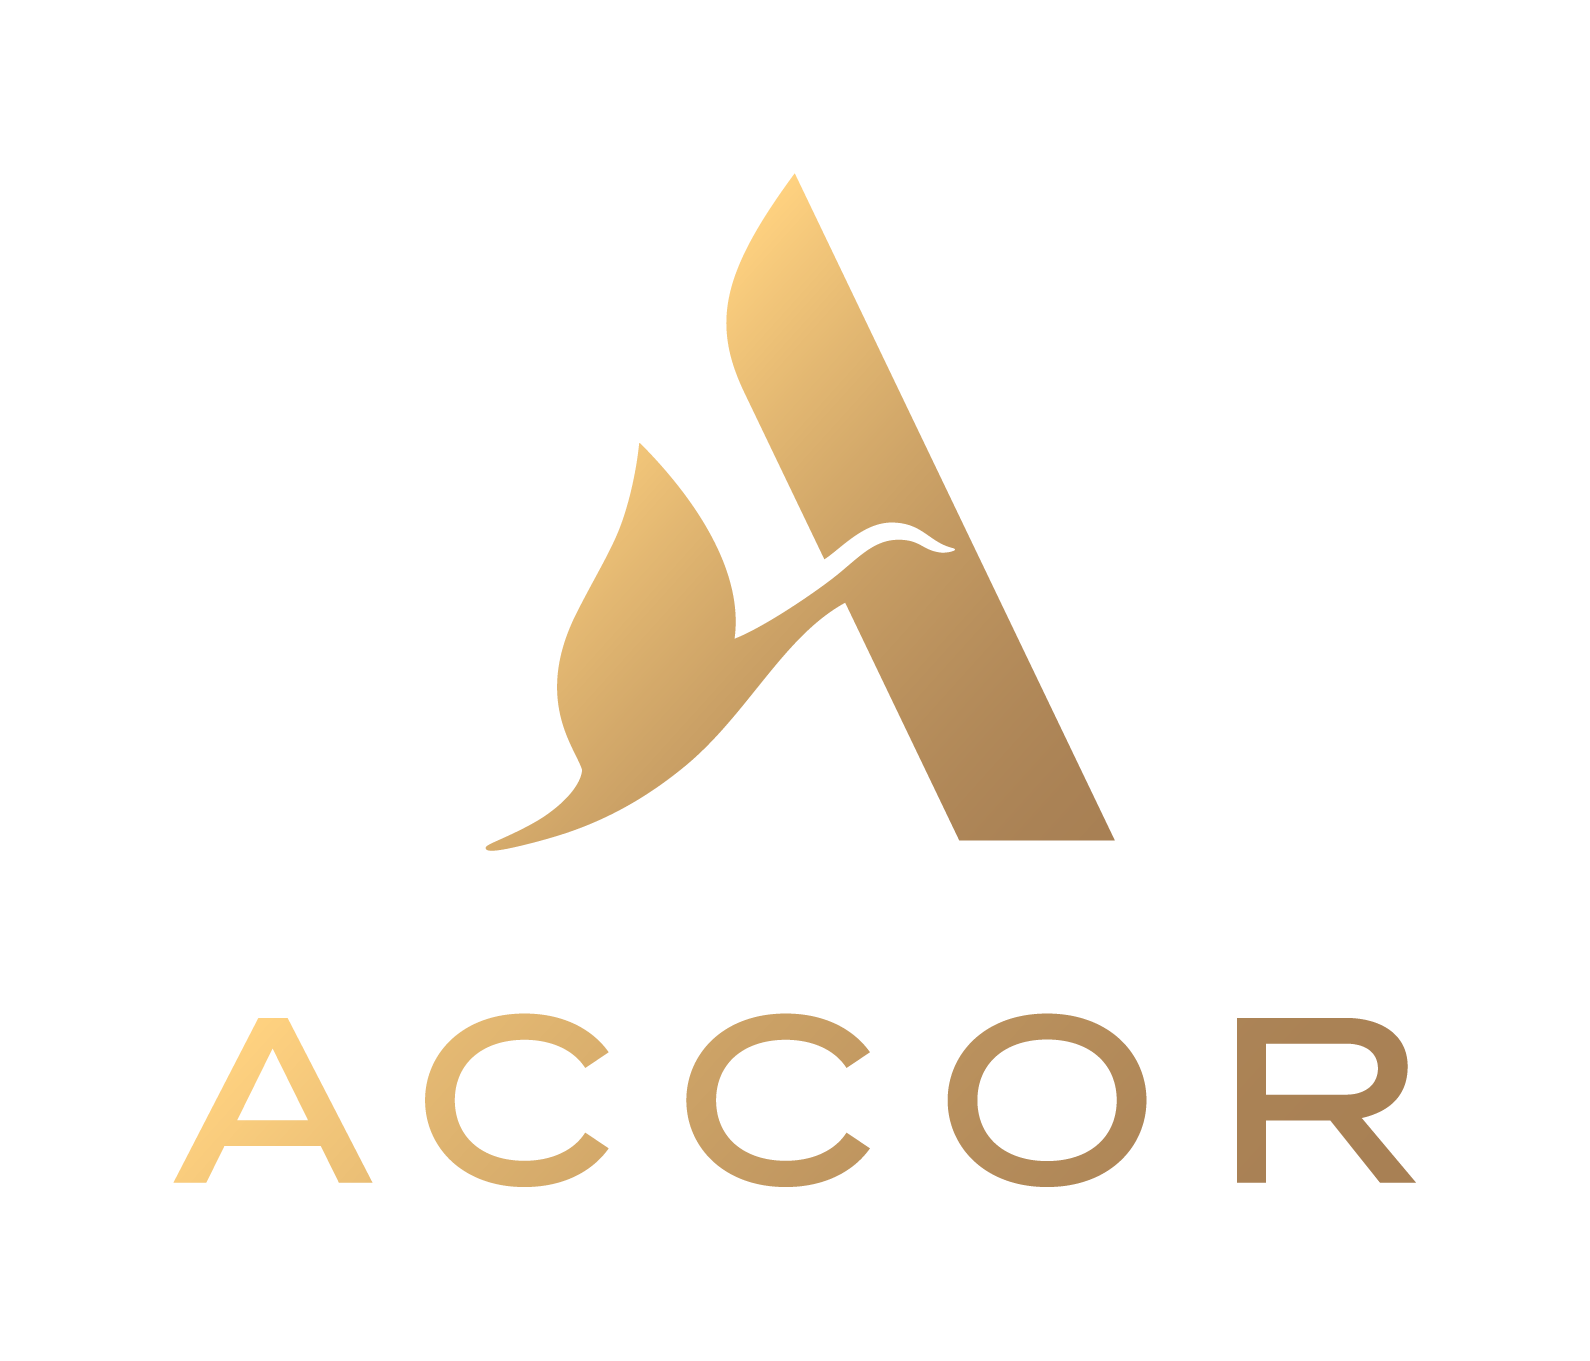 Accor_logo_gold_transparent